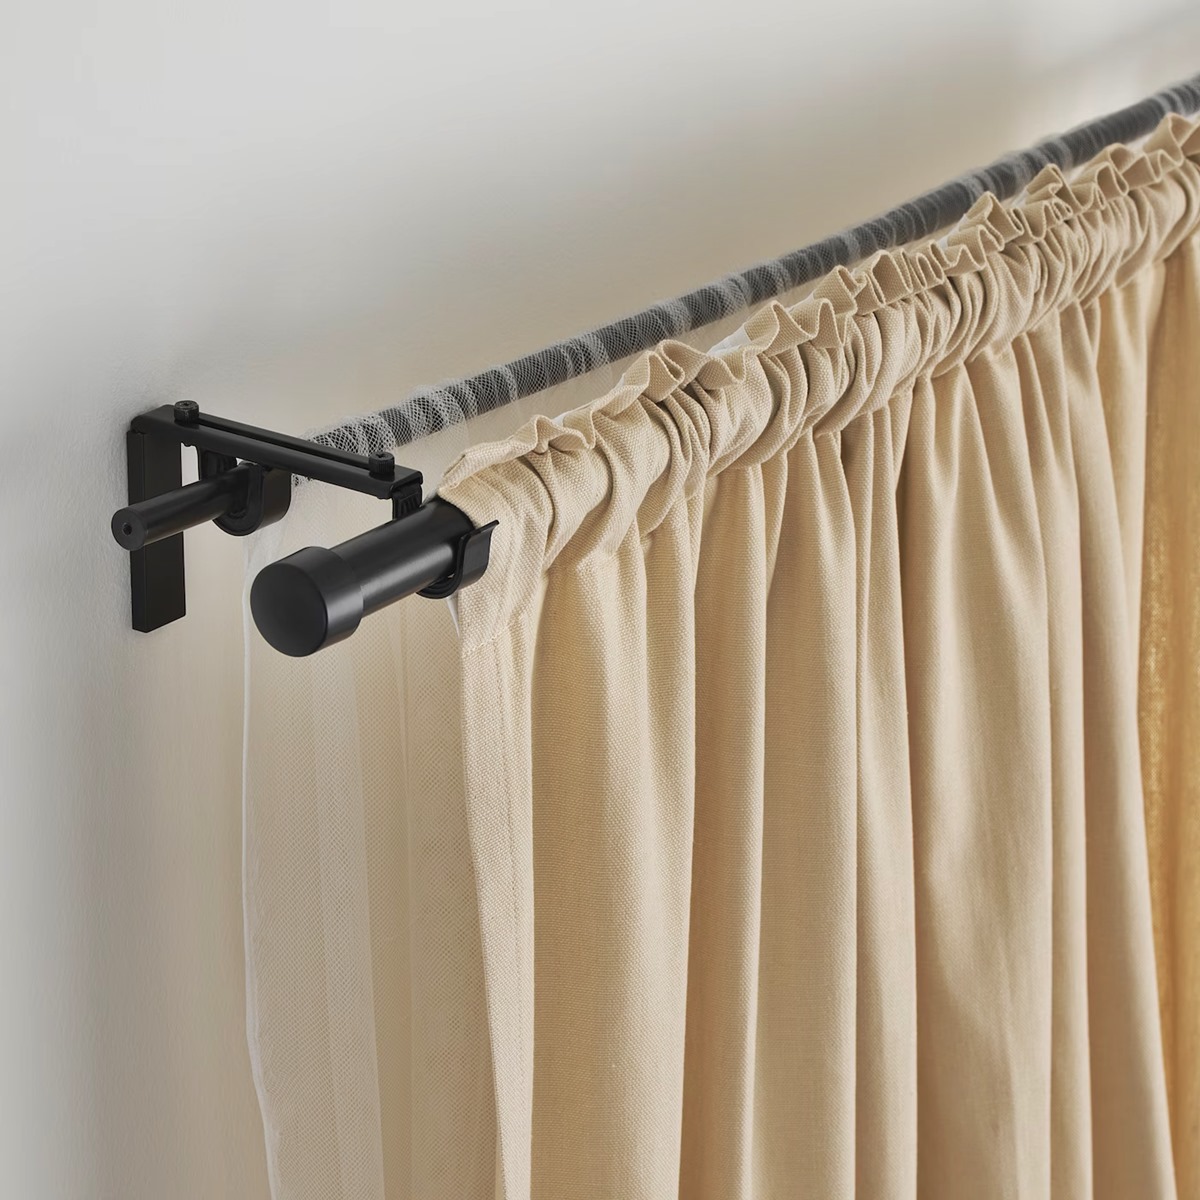 How To Install IKEA Curtain Rod